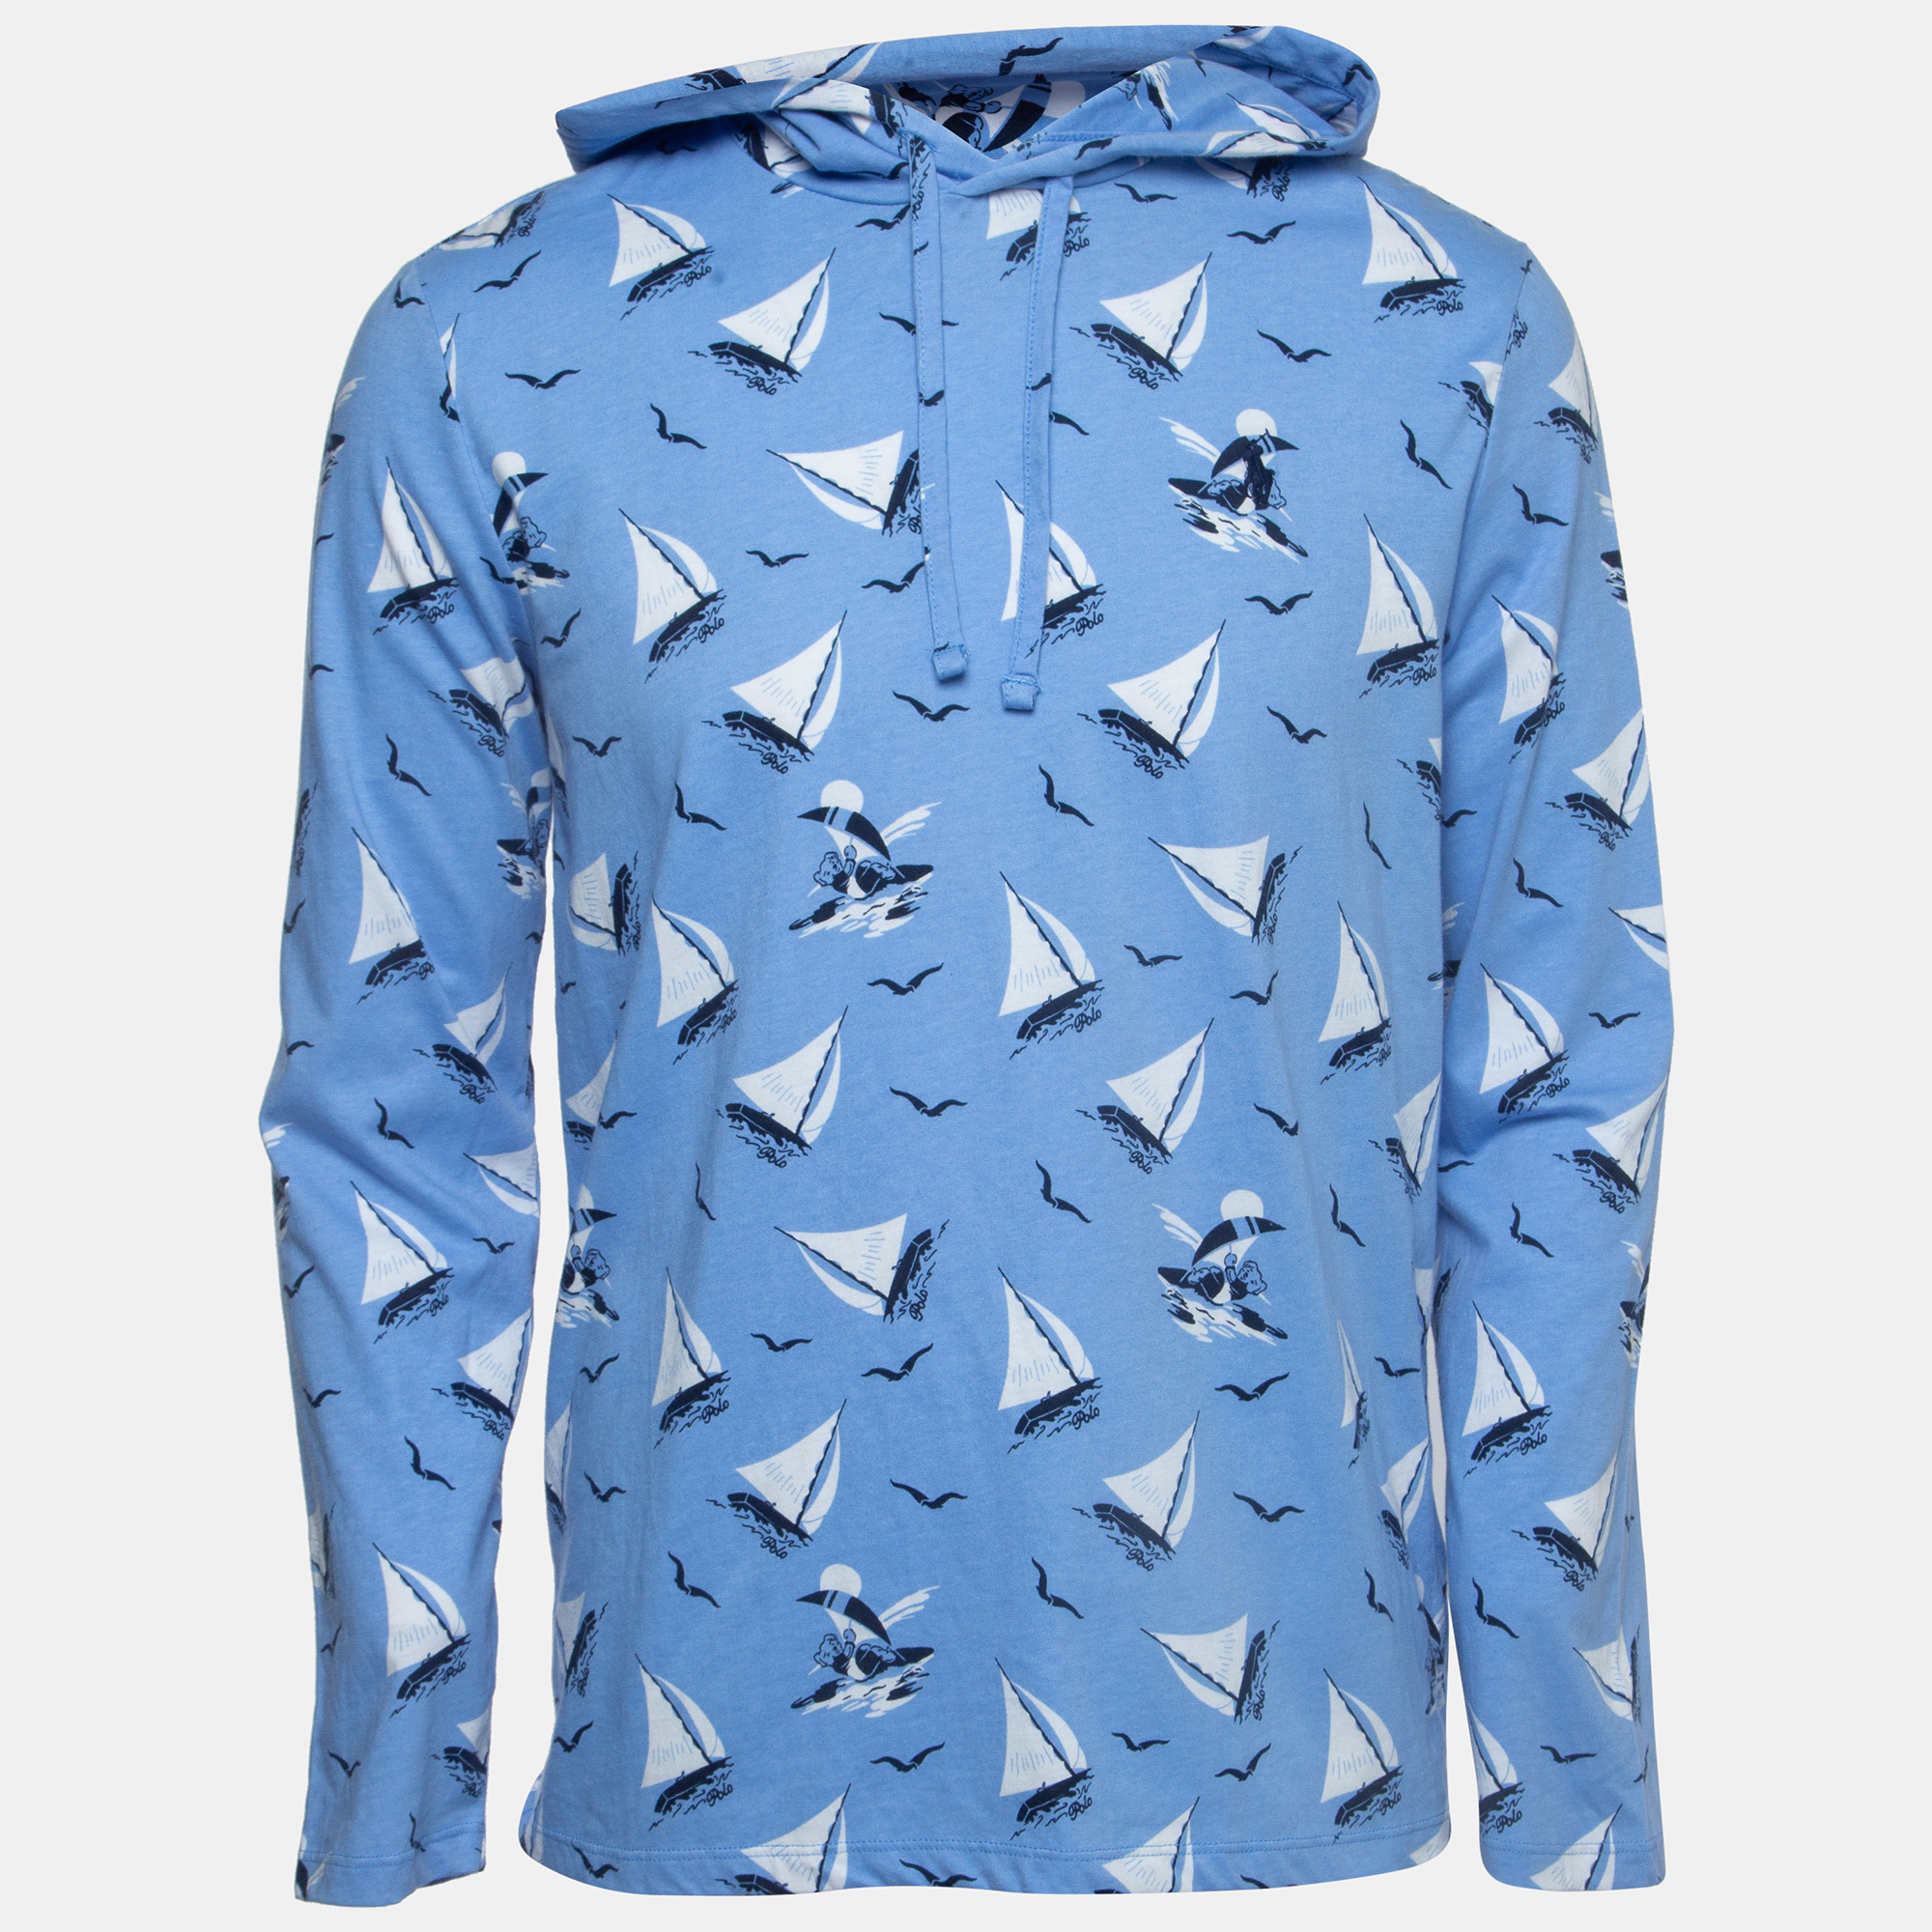 Polo Ralph Lauren Blue All-Over Yacht Print Cotton Hooded Sweatshirt S